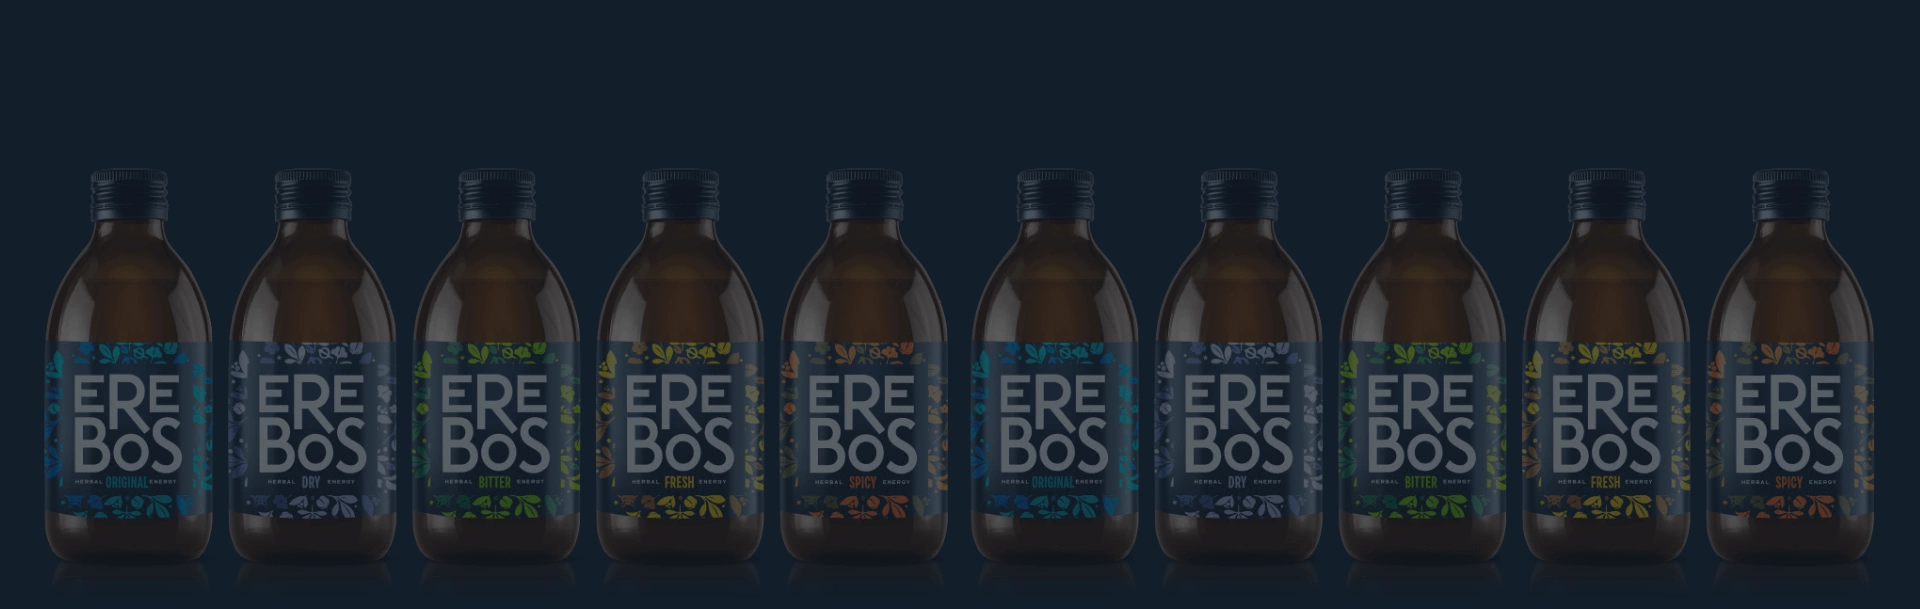 Erebos web background